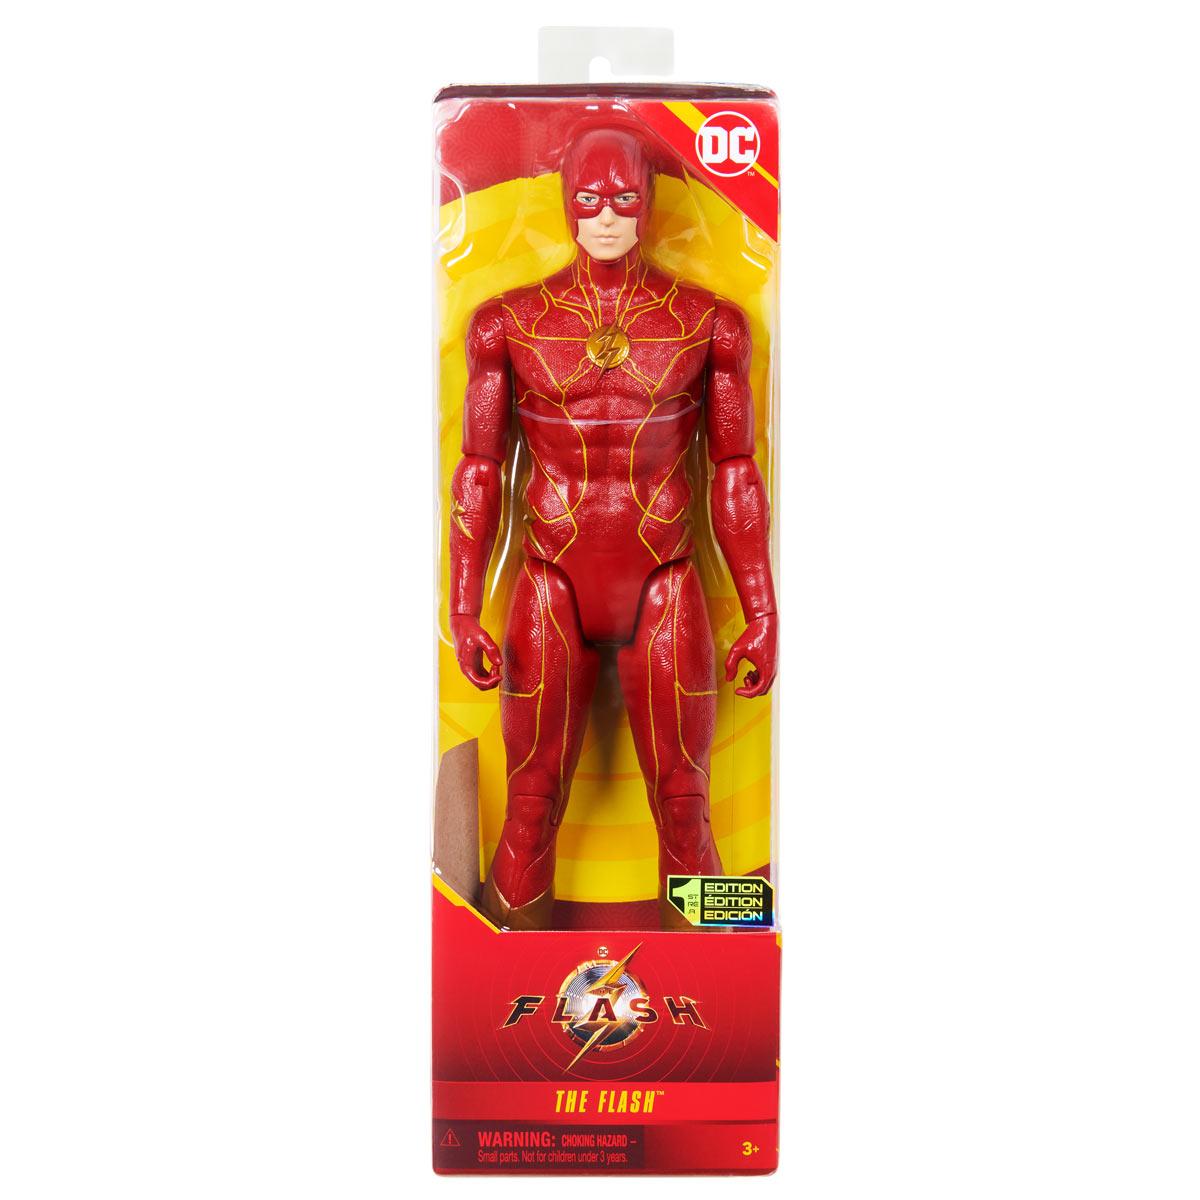 The Flash - Boneco de 30cm do Flash